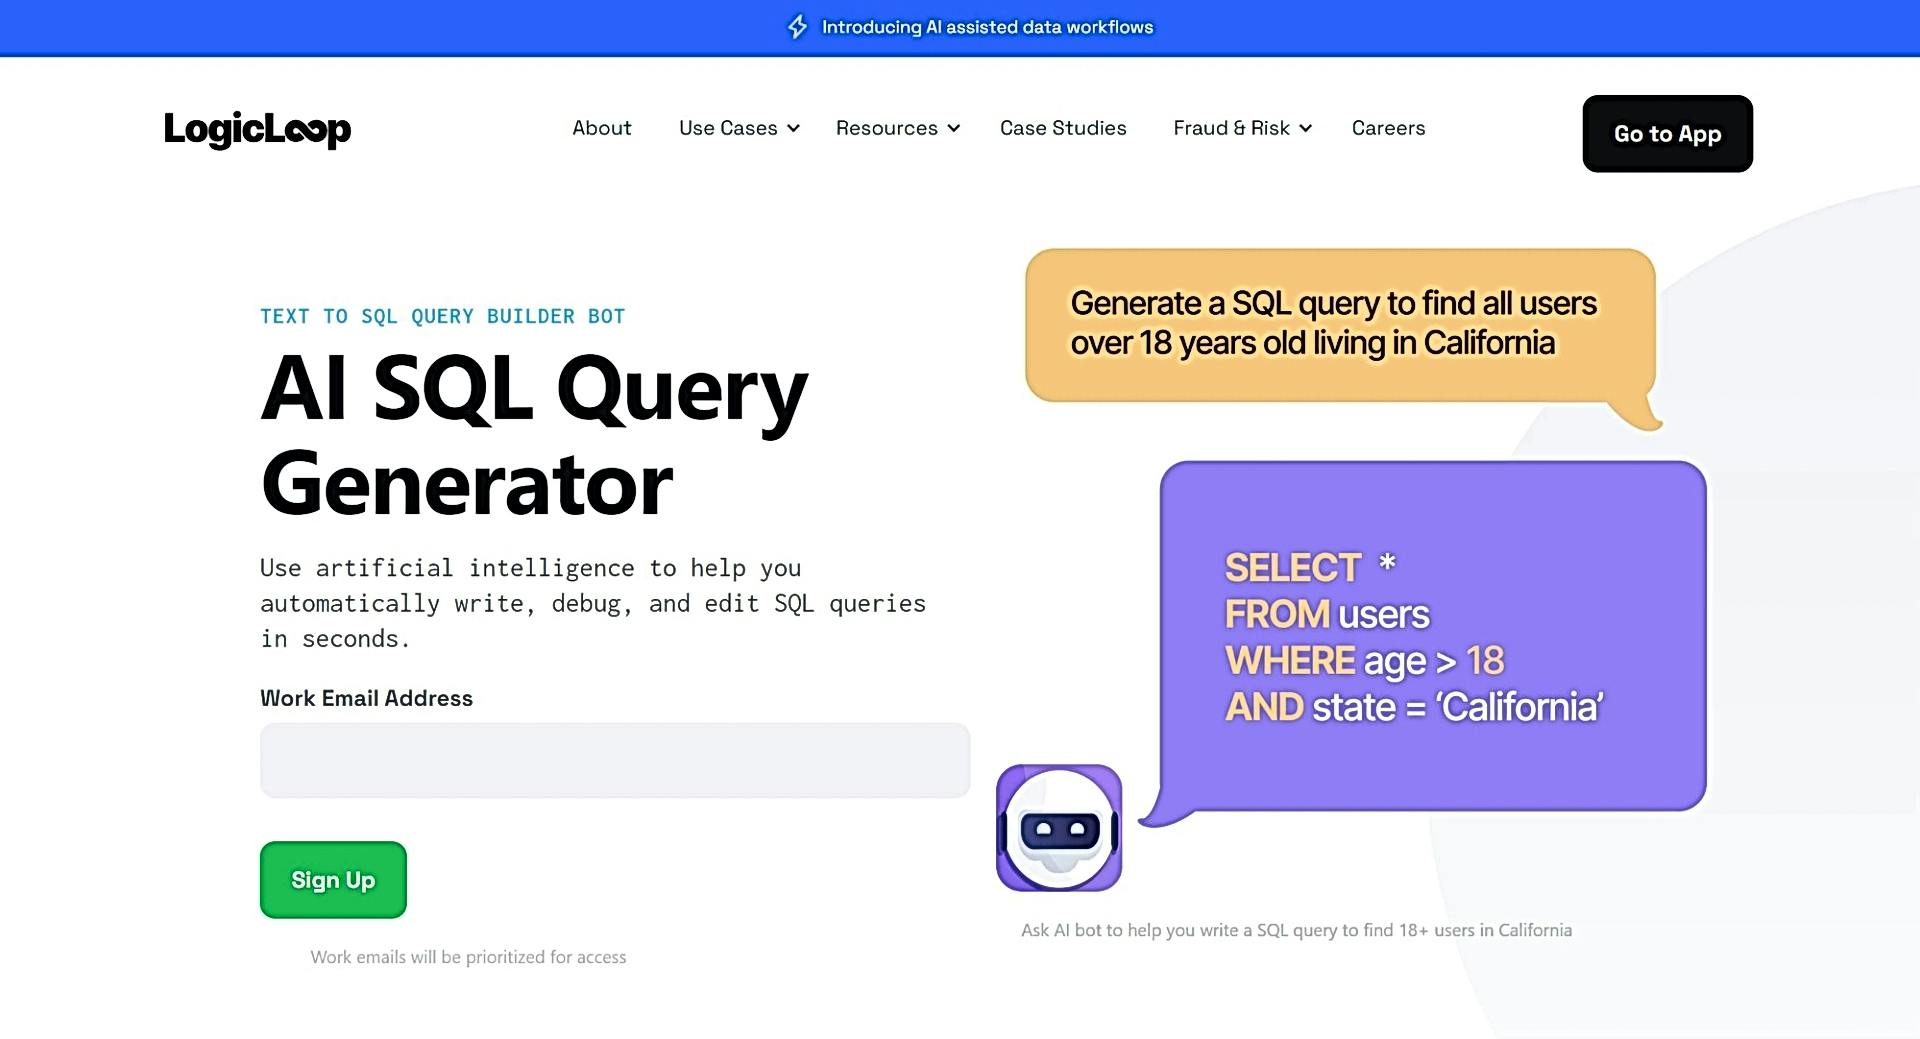 LogicLoop AI SQL featured